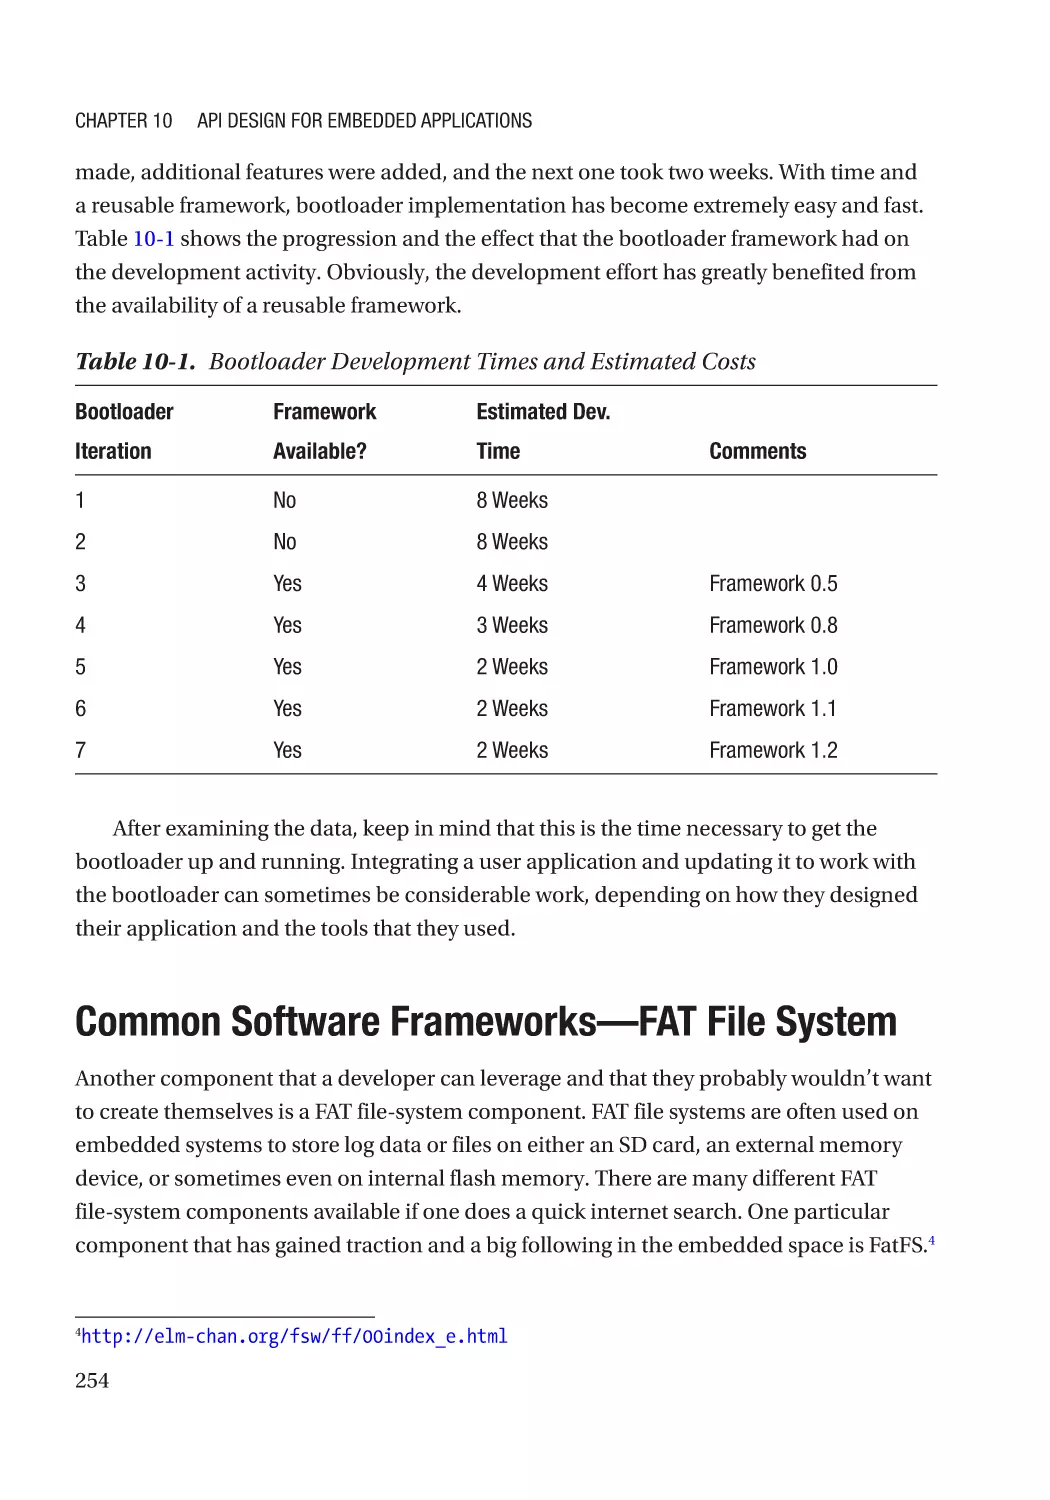 Common Software Frameworks—FAT File System